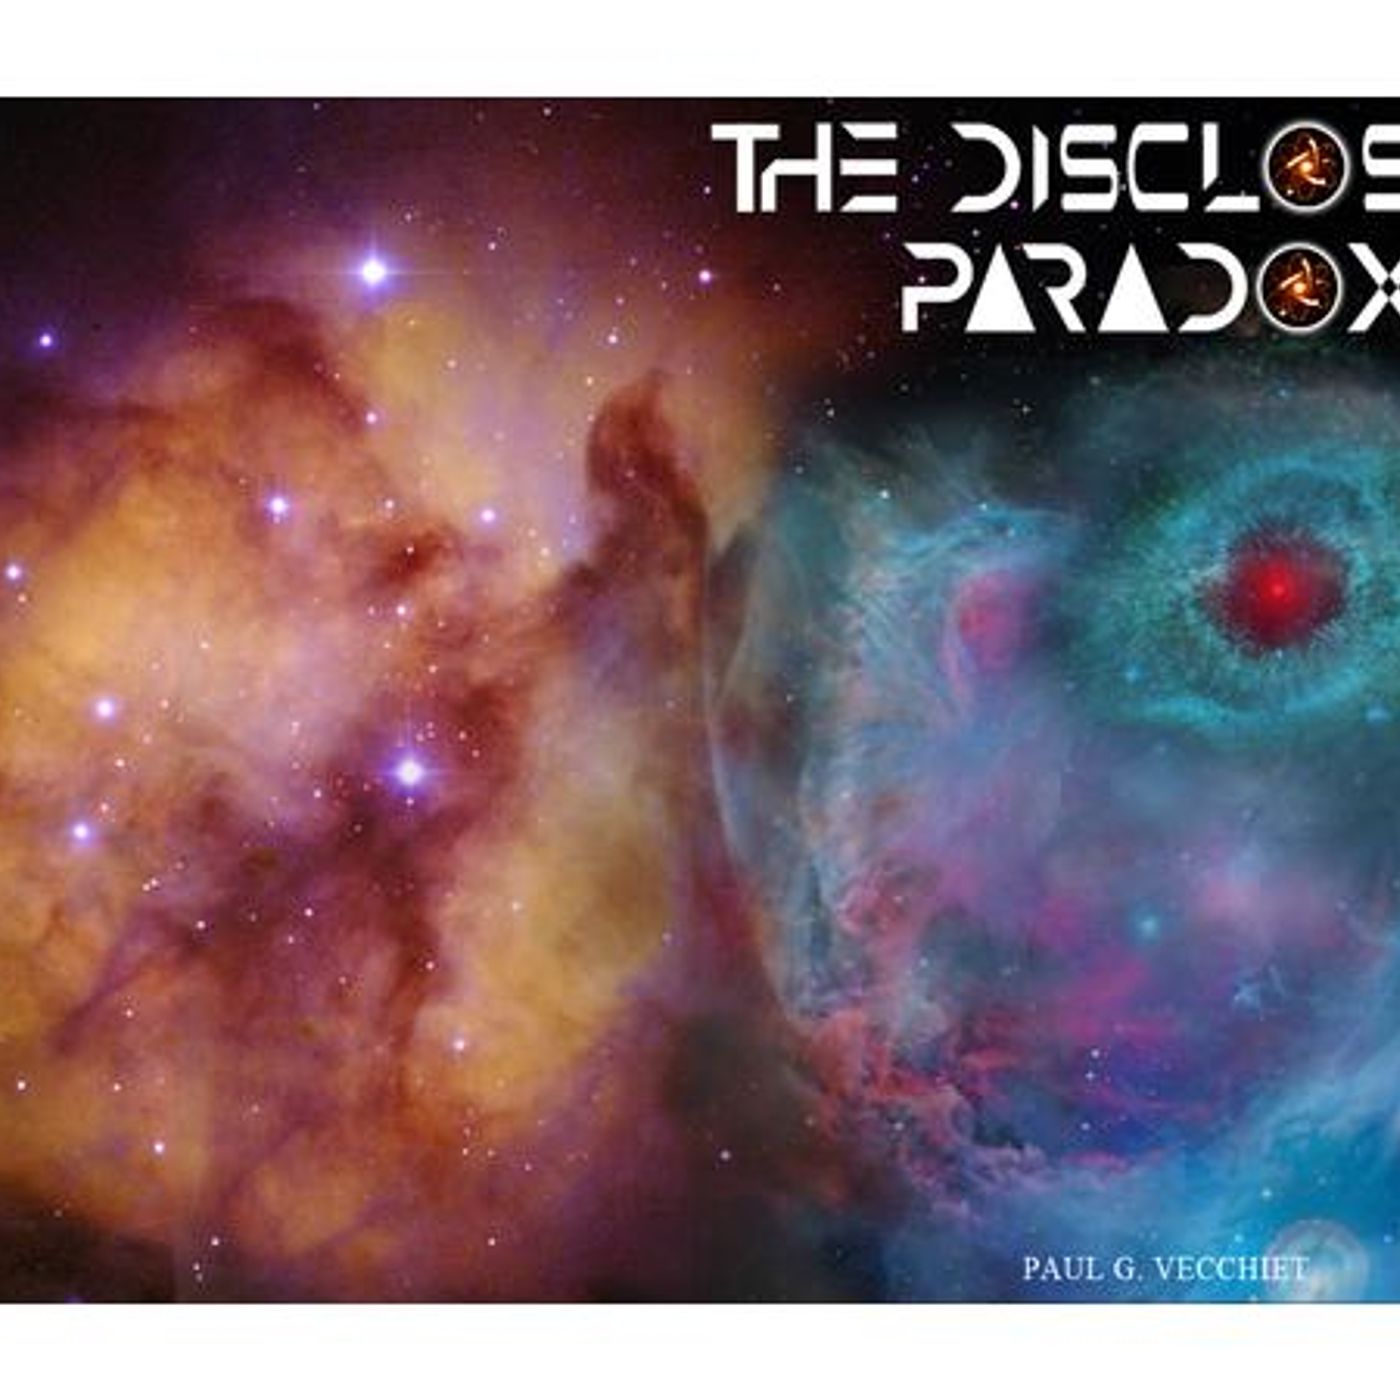 Disclosure Paradox by Paul G Vecchiet, ACO UFO Book Club